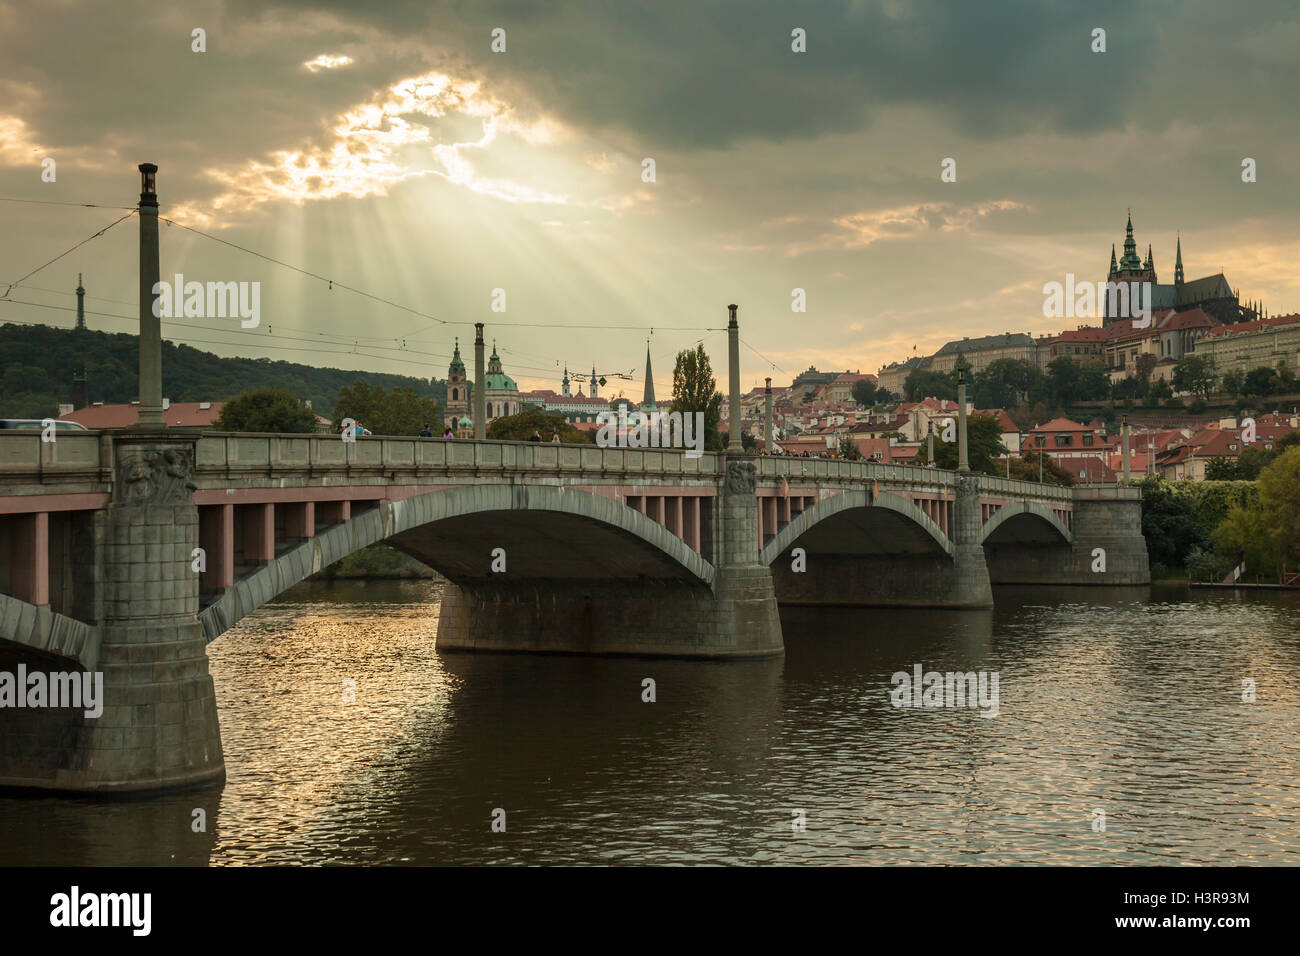 Sky open over Manes Bridge and Hradcany in Prague, Czech Republic. Stock Photo